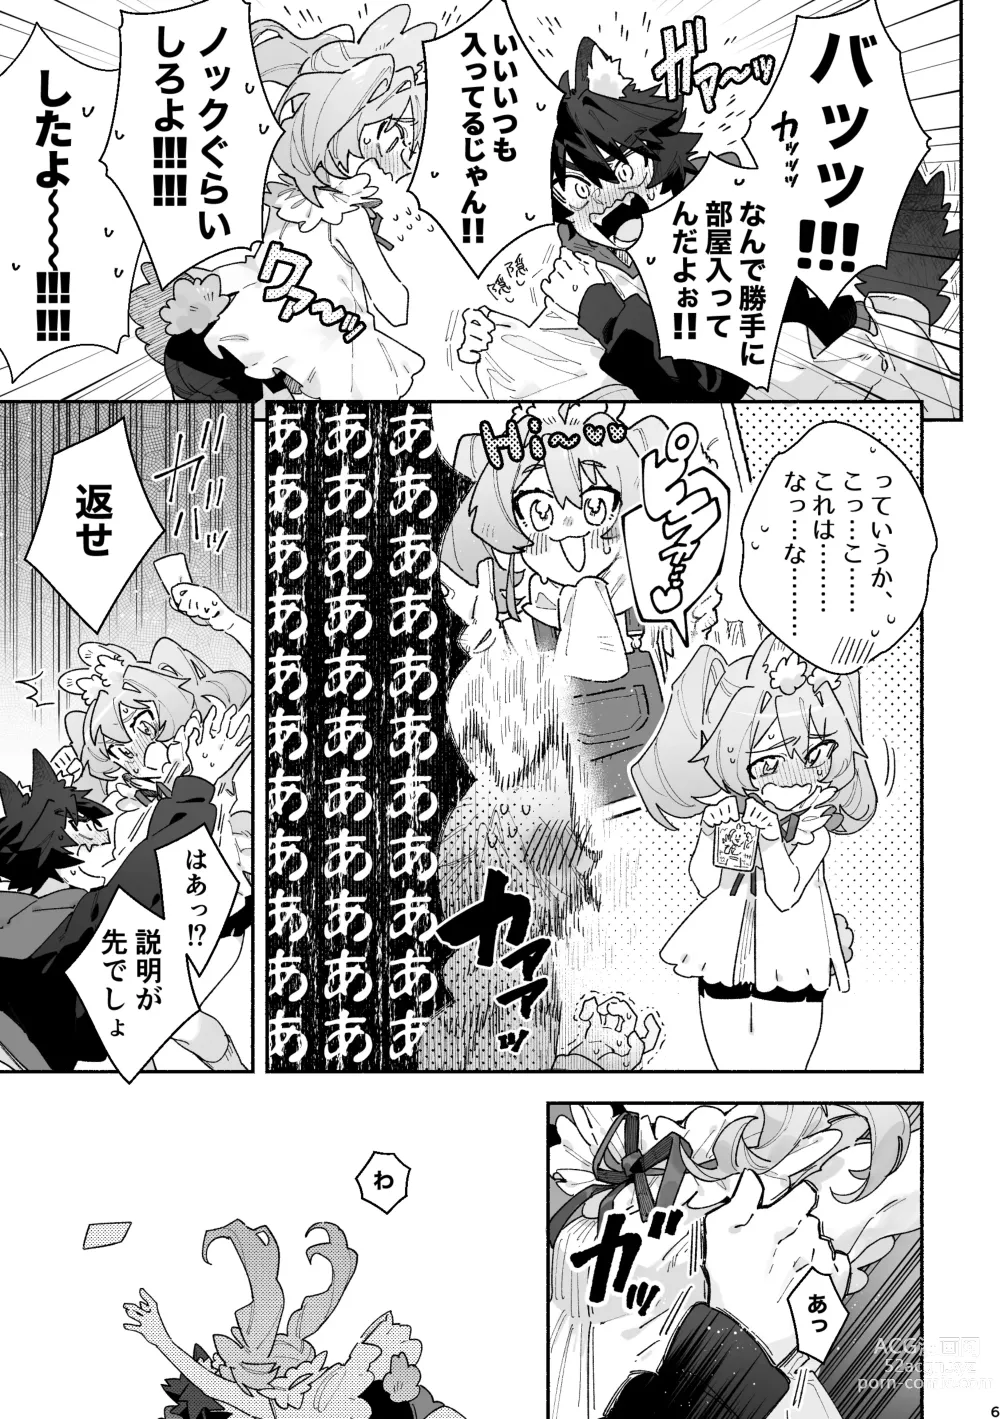 Page 6 of doujinshi ♂ ga Uke. Usagi-chan x Ookami-kun